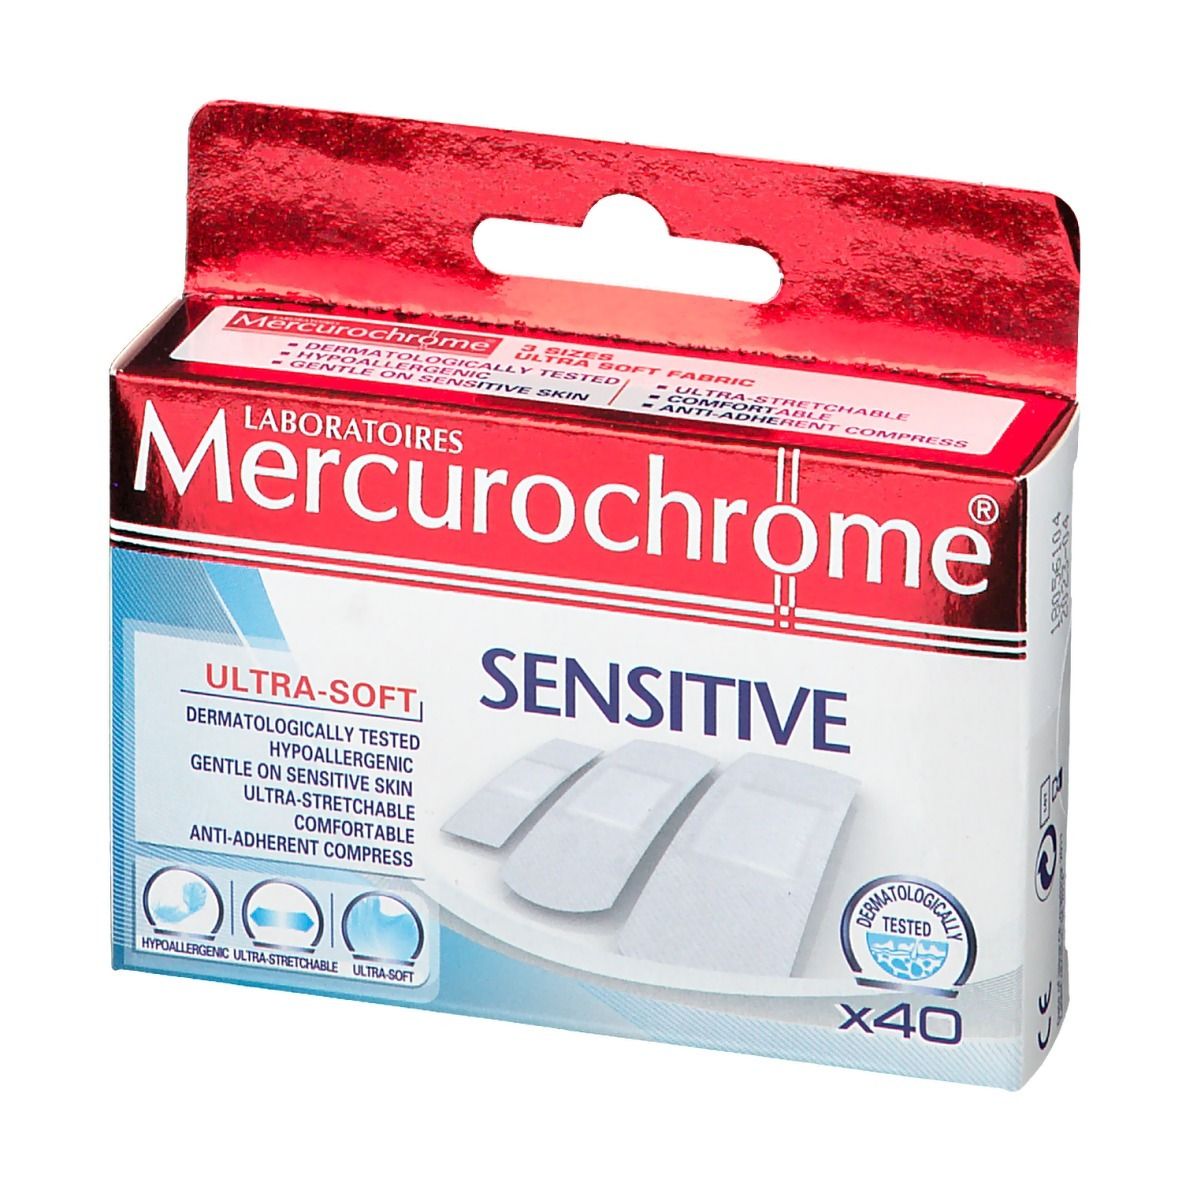 Mercurochrome® Sensitive